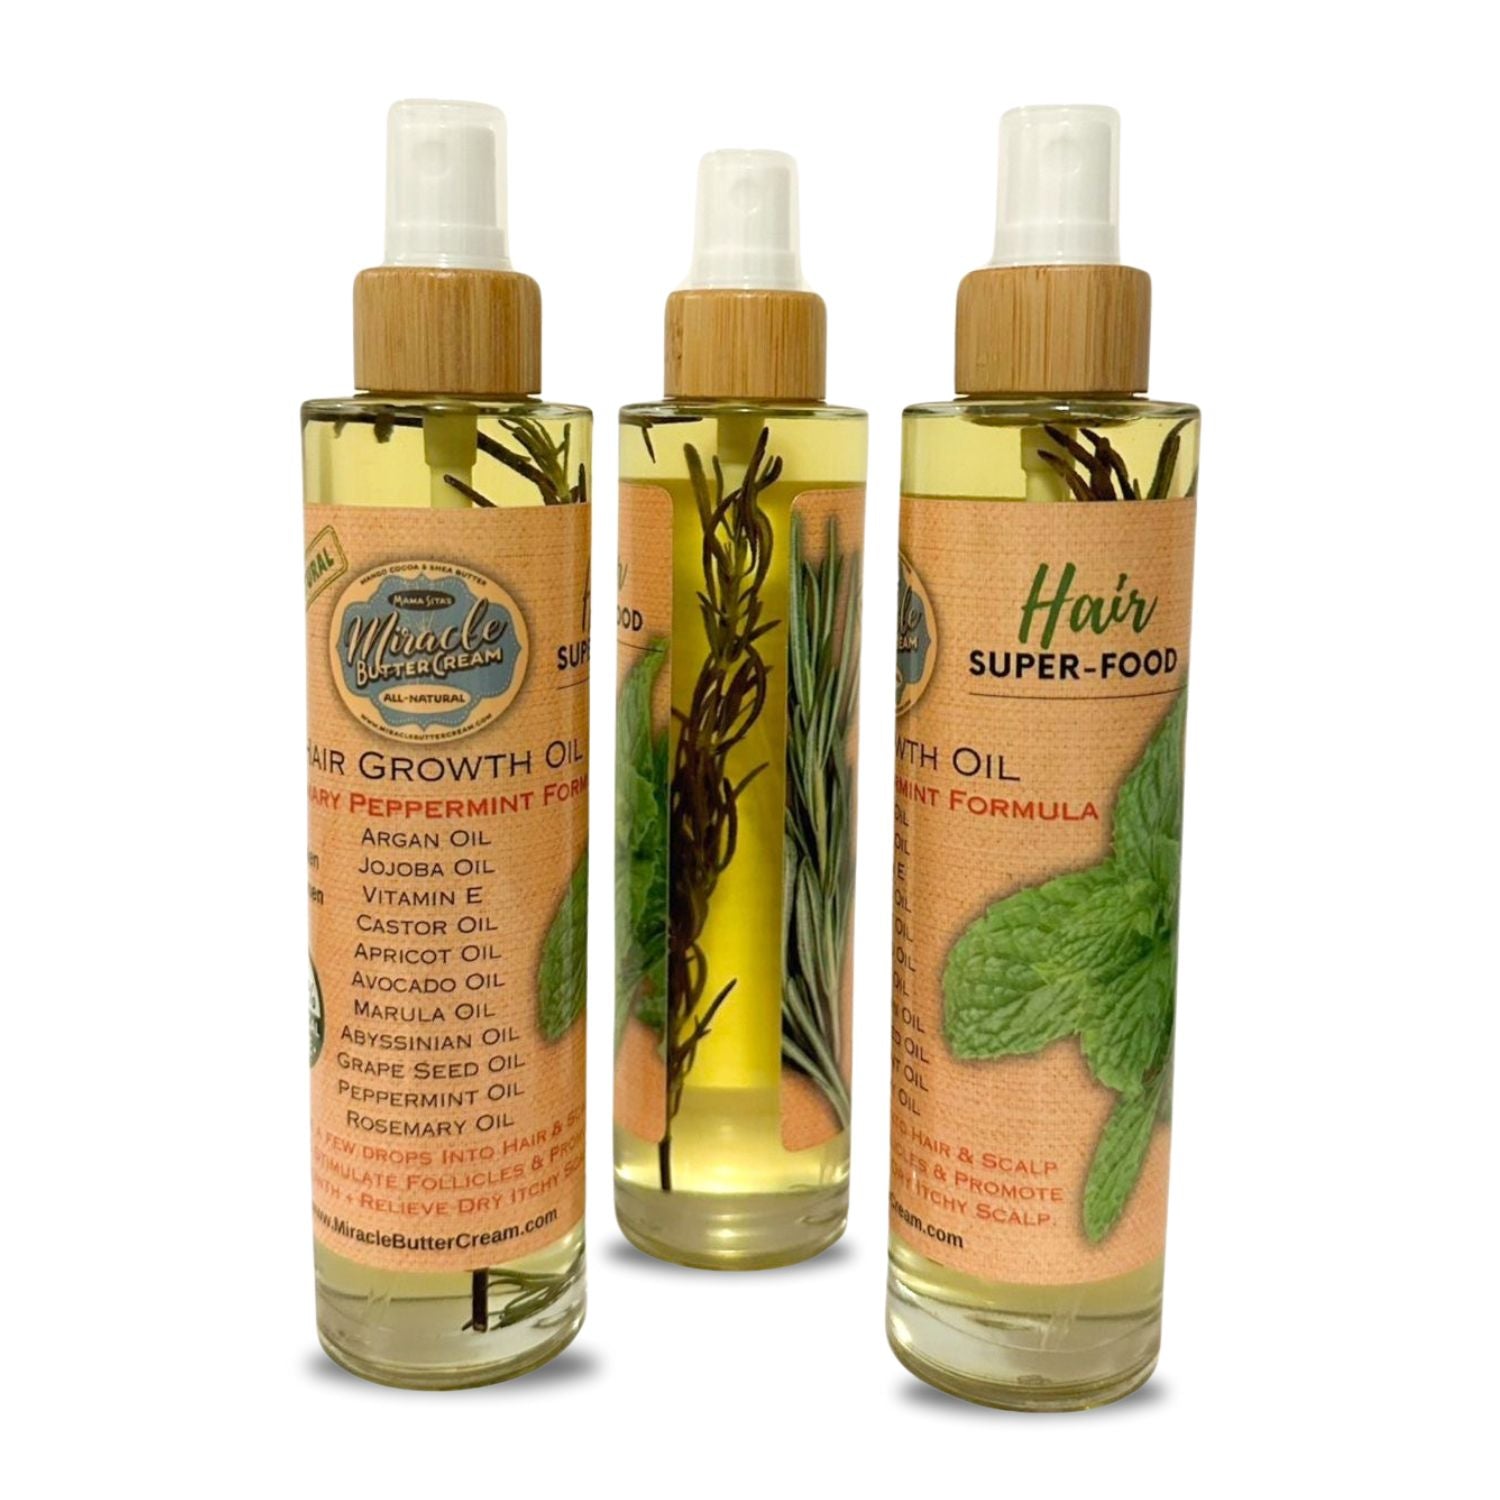 Hair Growth Oil (Rosemary Mint Formula), MiracleButterCream.com